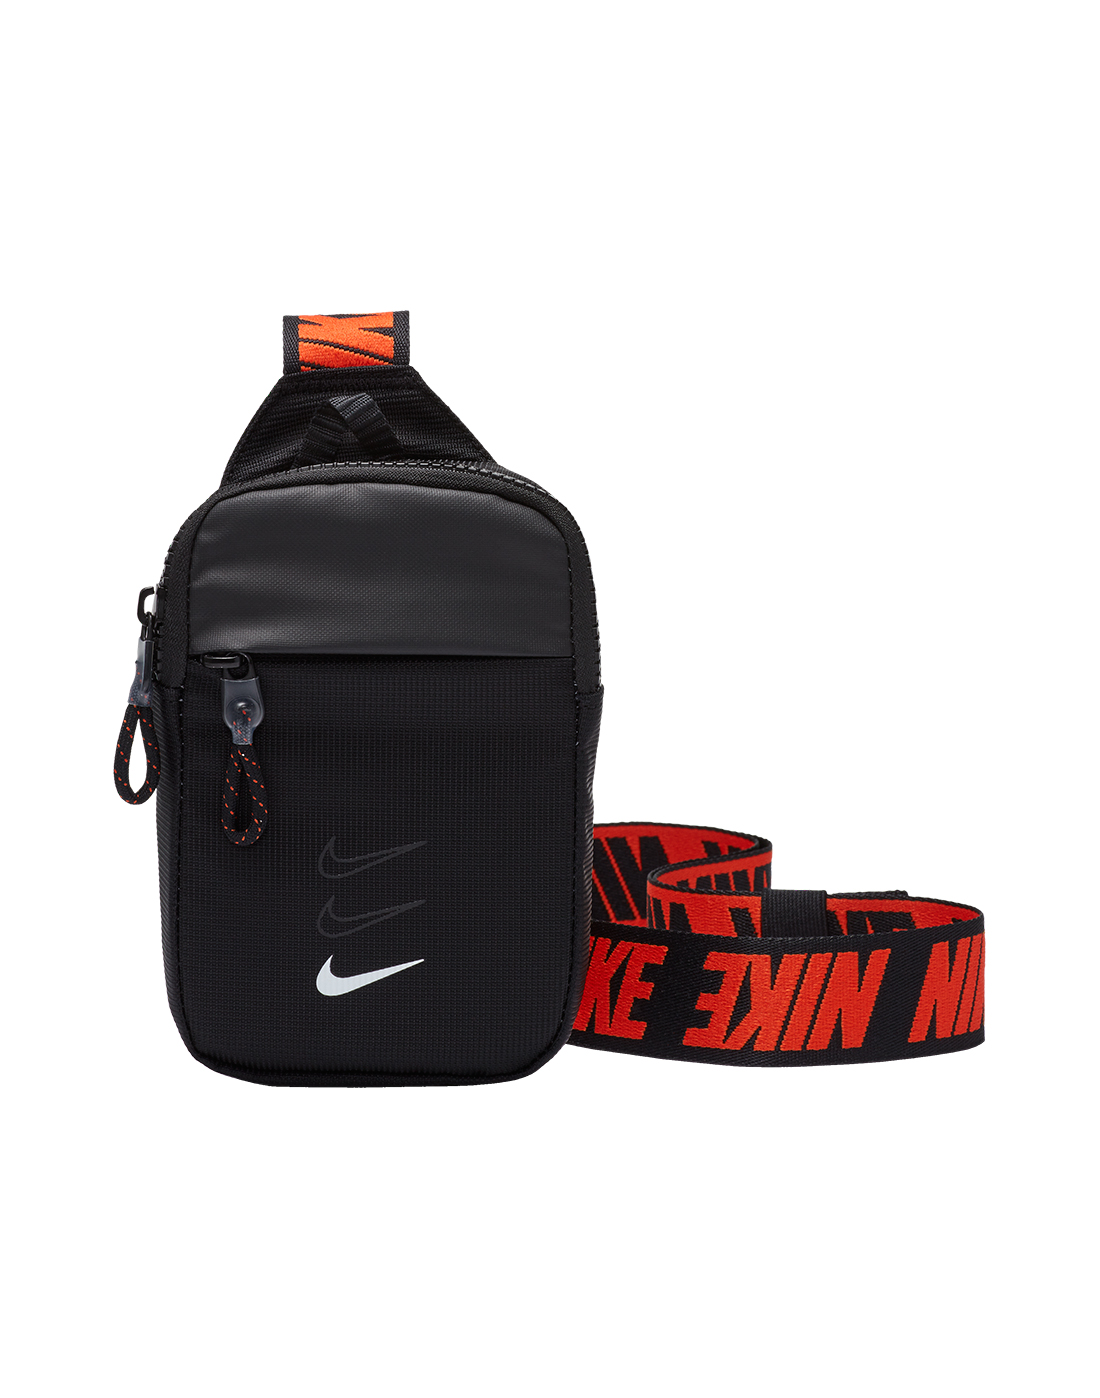 Nike Mens Small item Tape logo bag | Life Style Sports